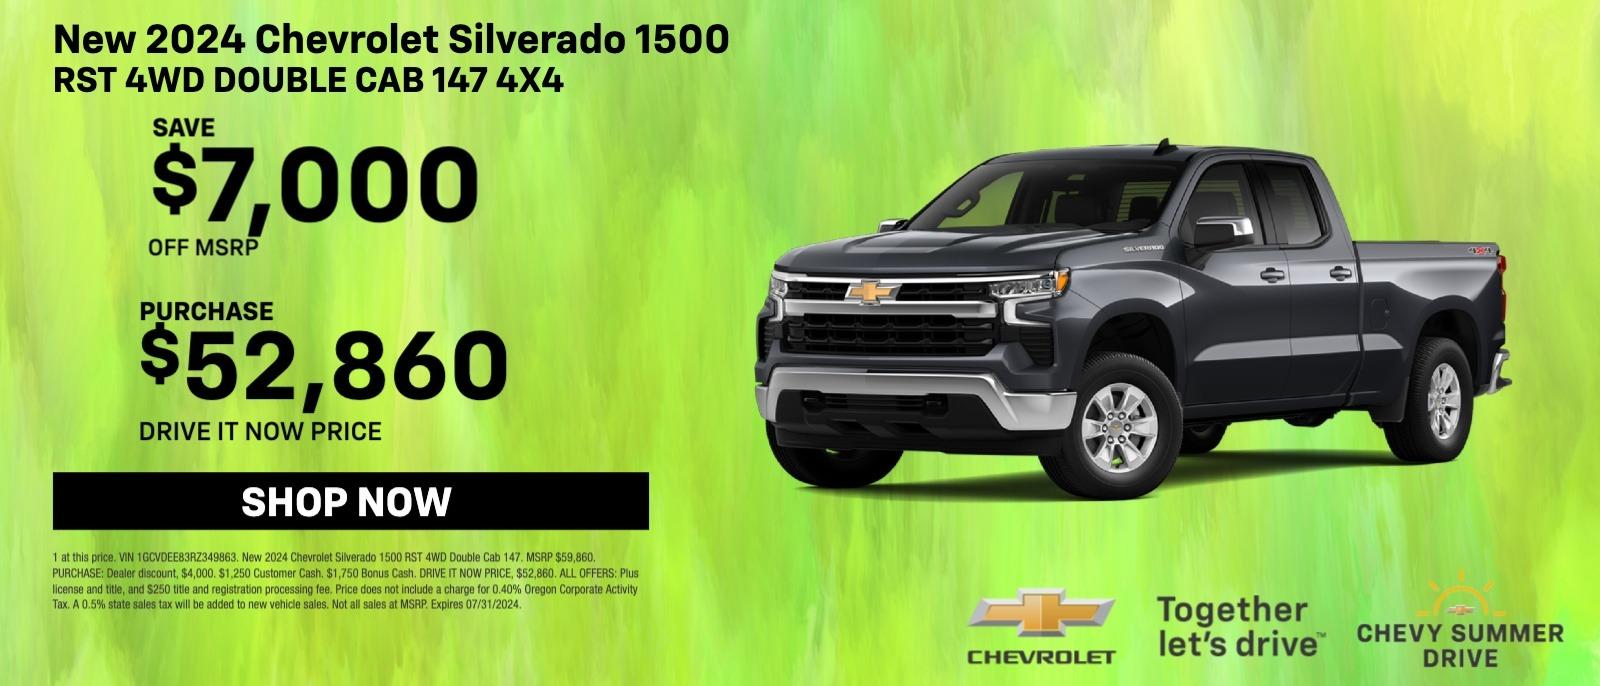 New 2024 Chevrolet Silverado 1500